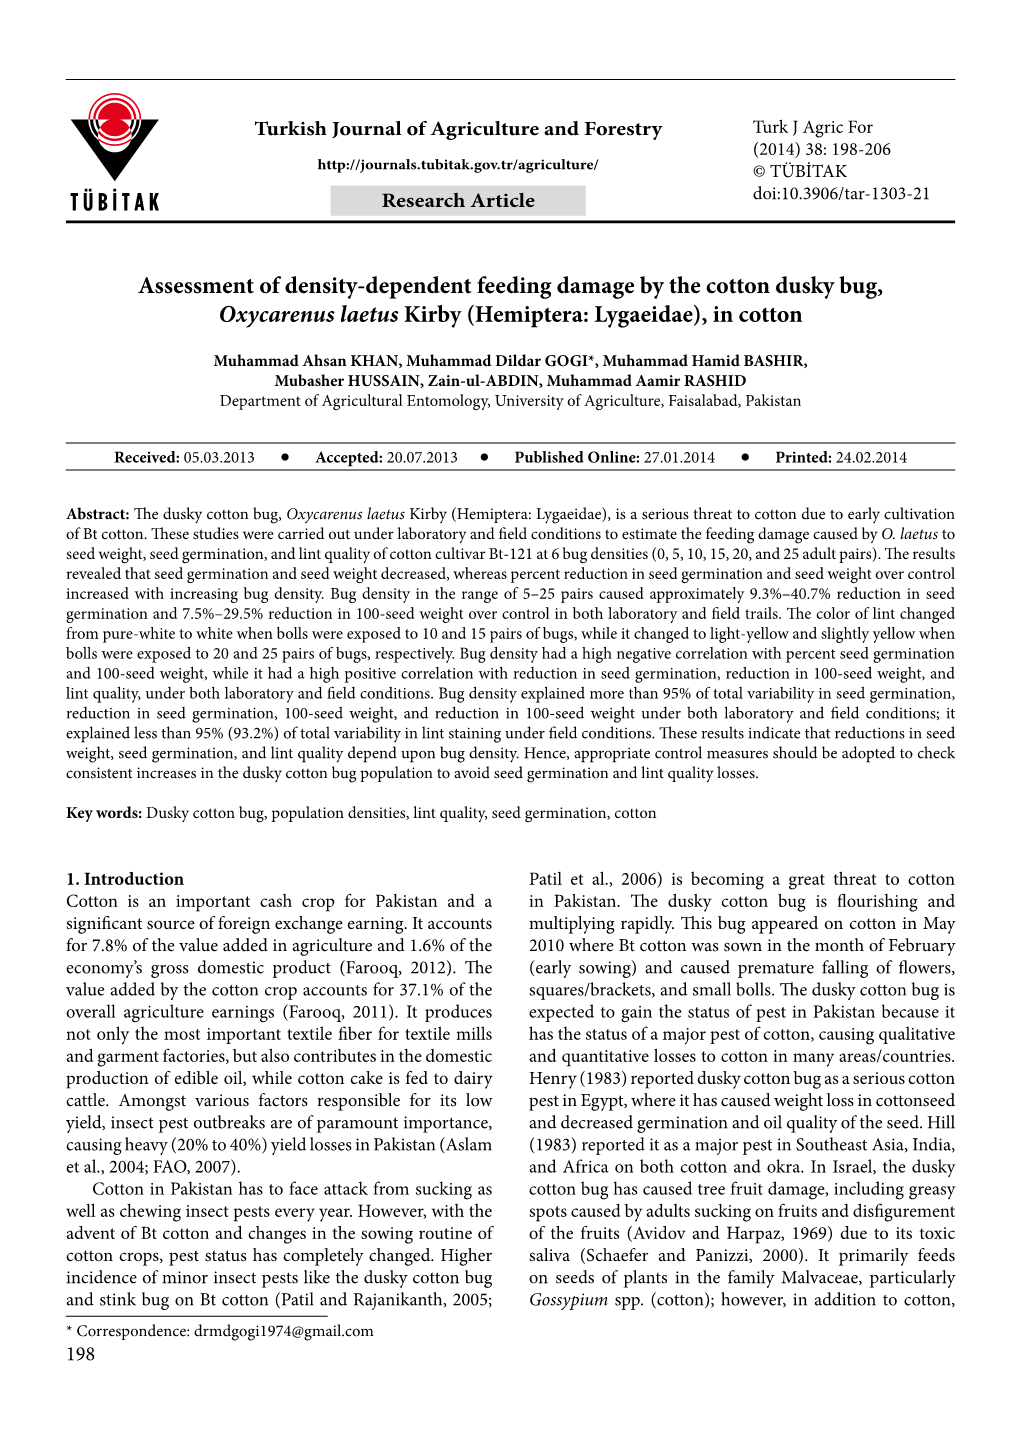 Assessment of Density-Dependent Feeding Damage by the Cotton Dusky Bug, Oxycarenus Laetus Kirby (Hemiptera: Lygaeidae), in Cotton